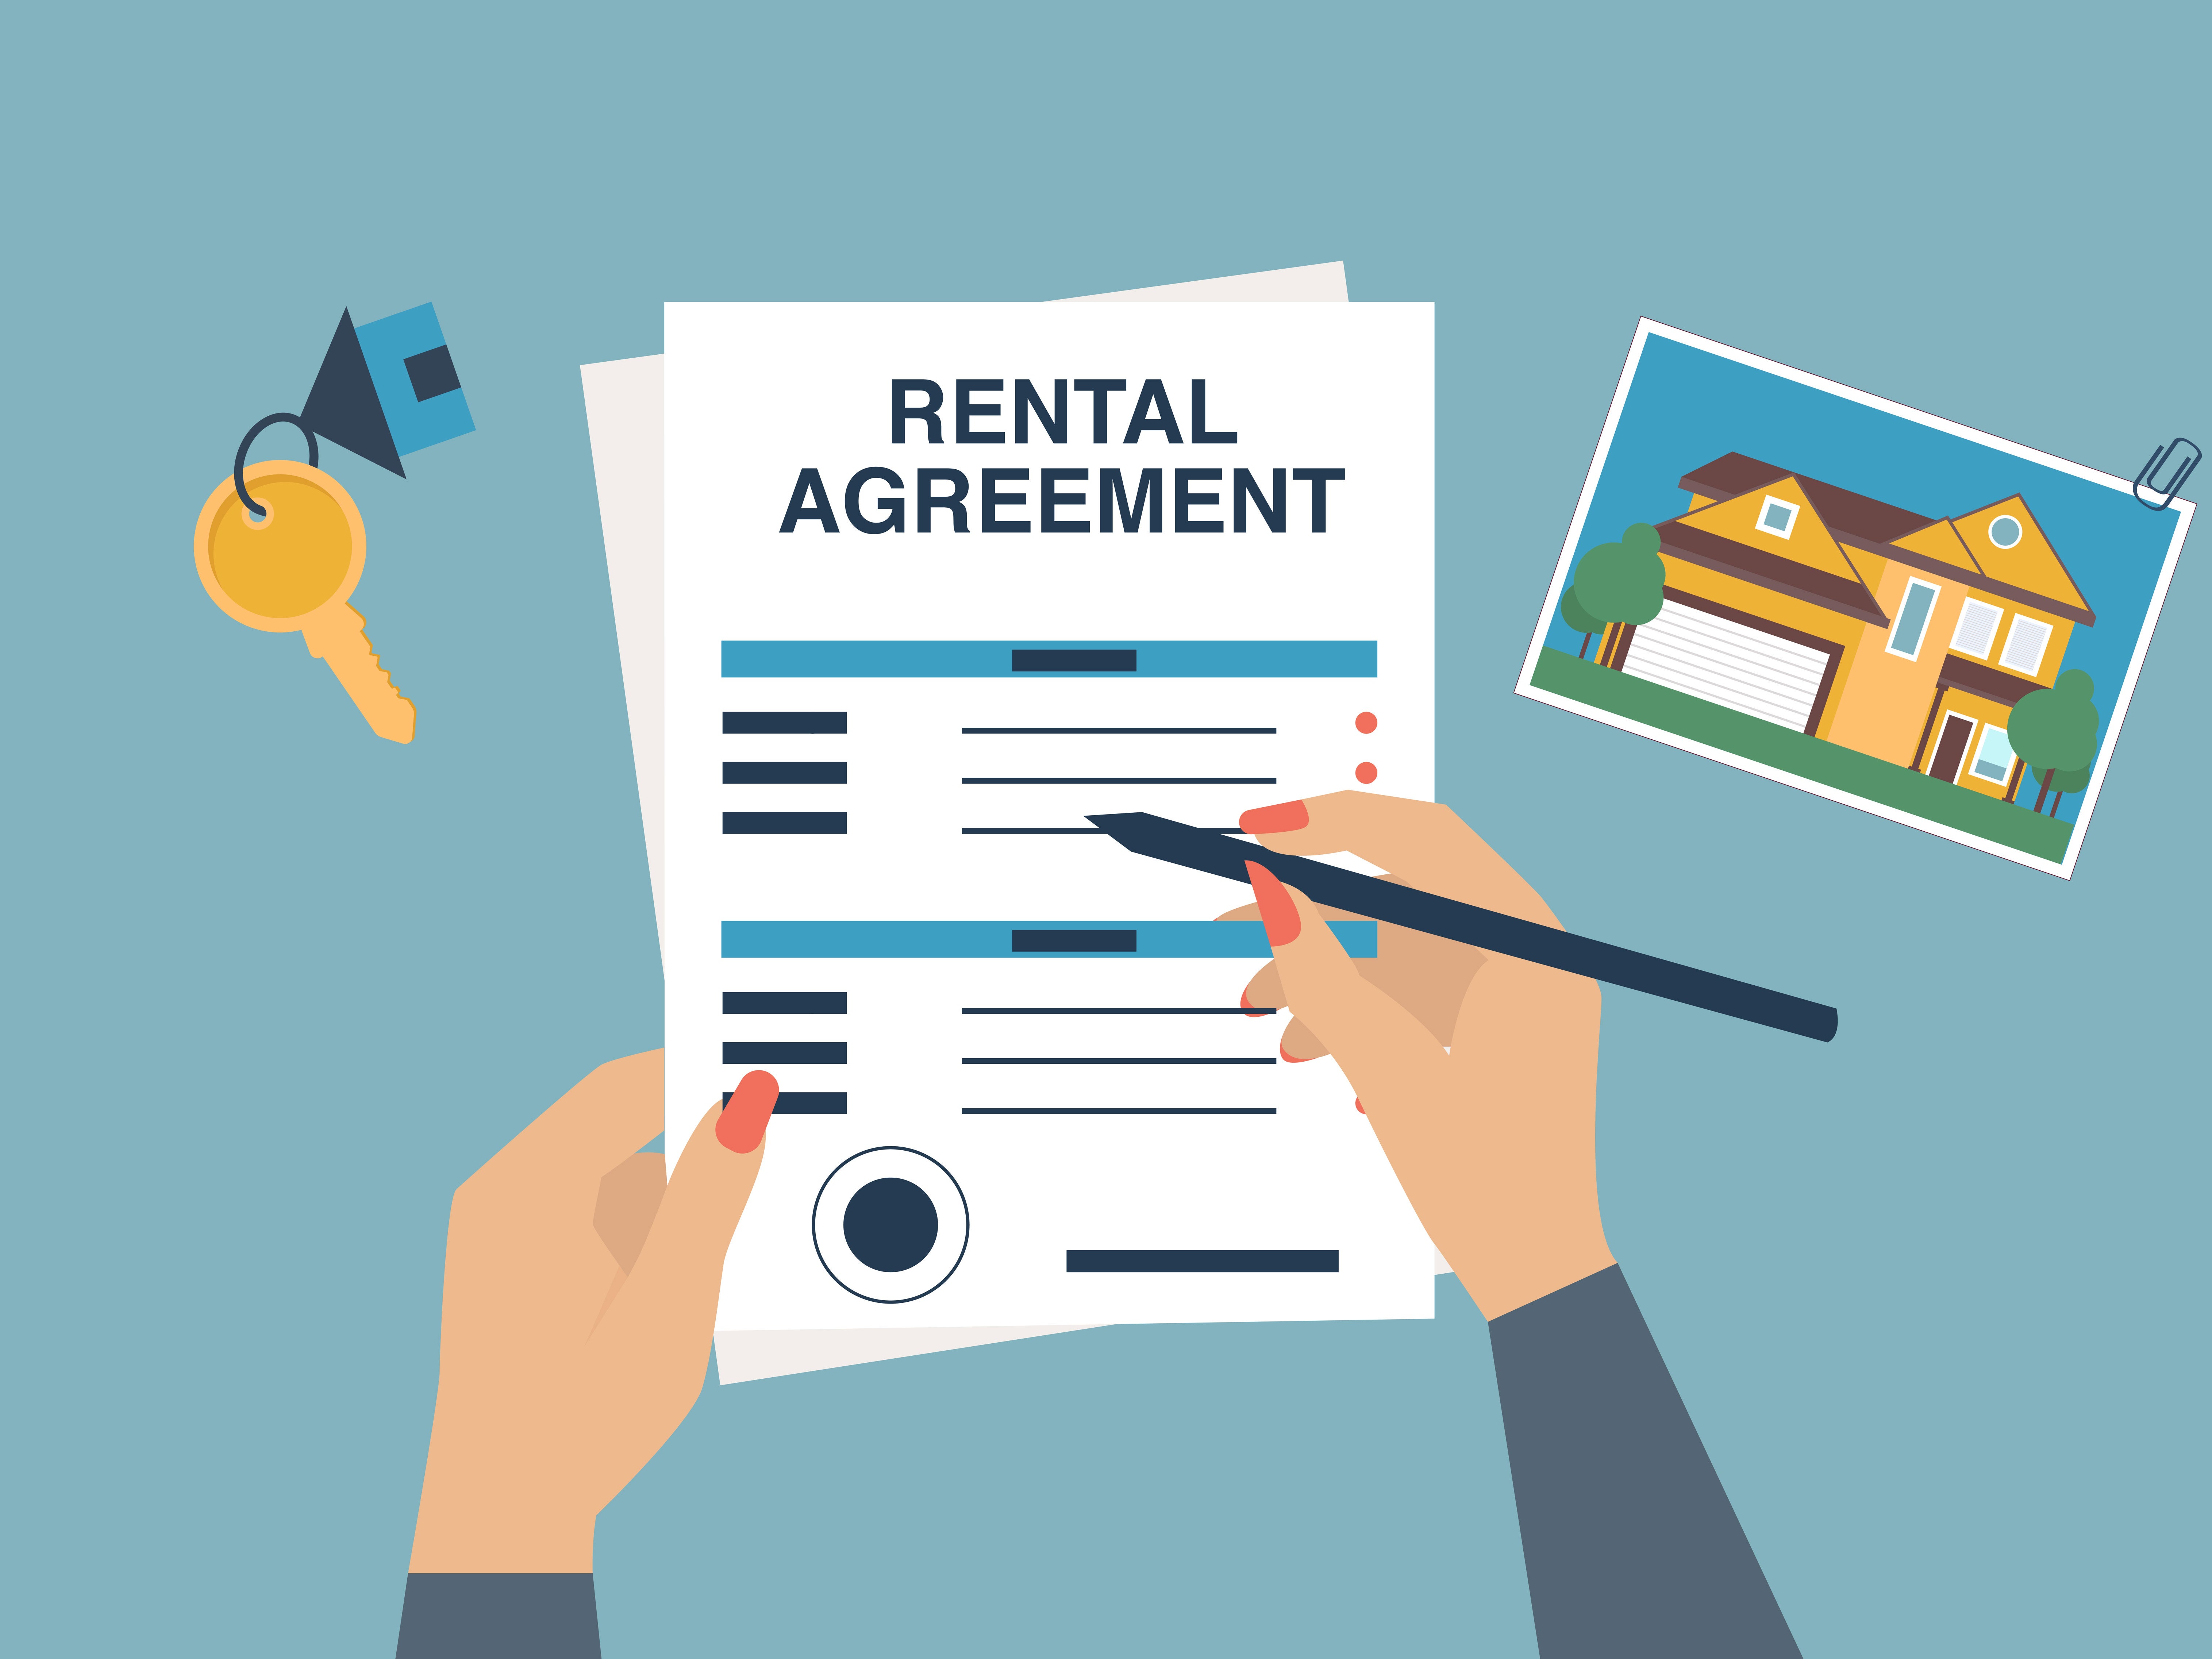 New residential tenancy reforms in Queensland